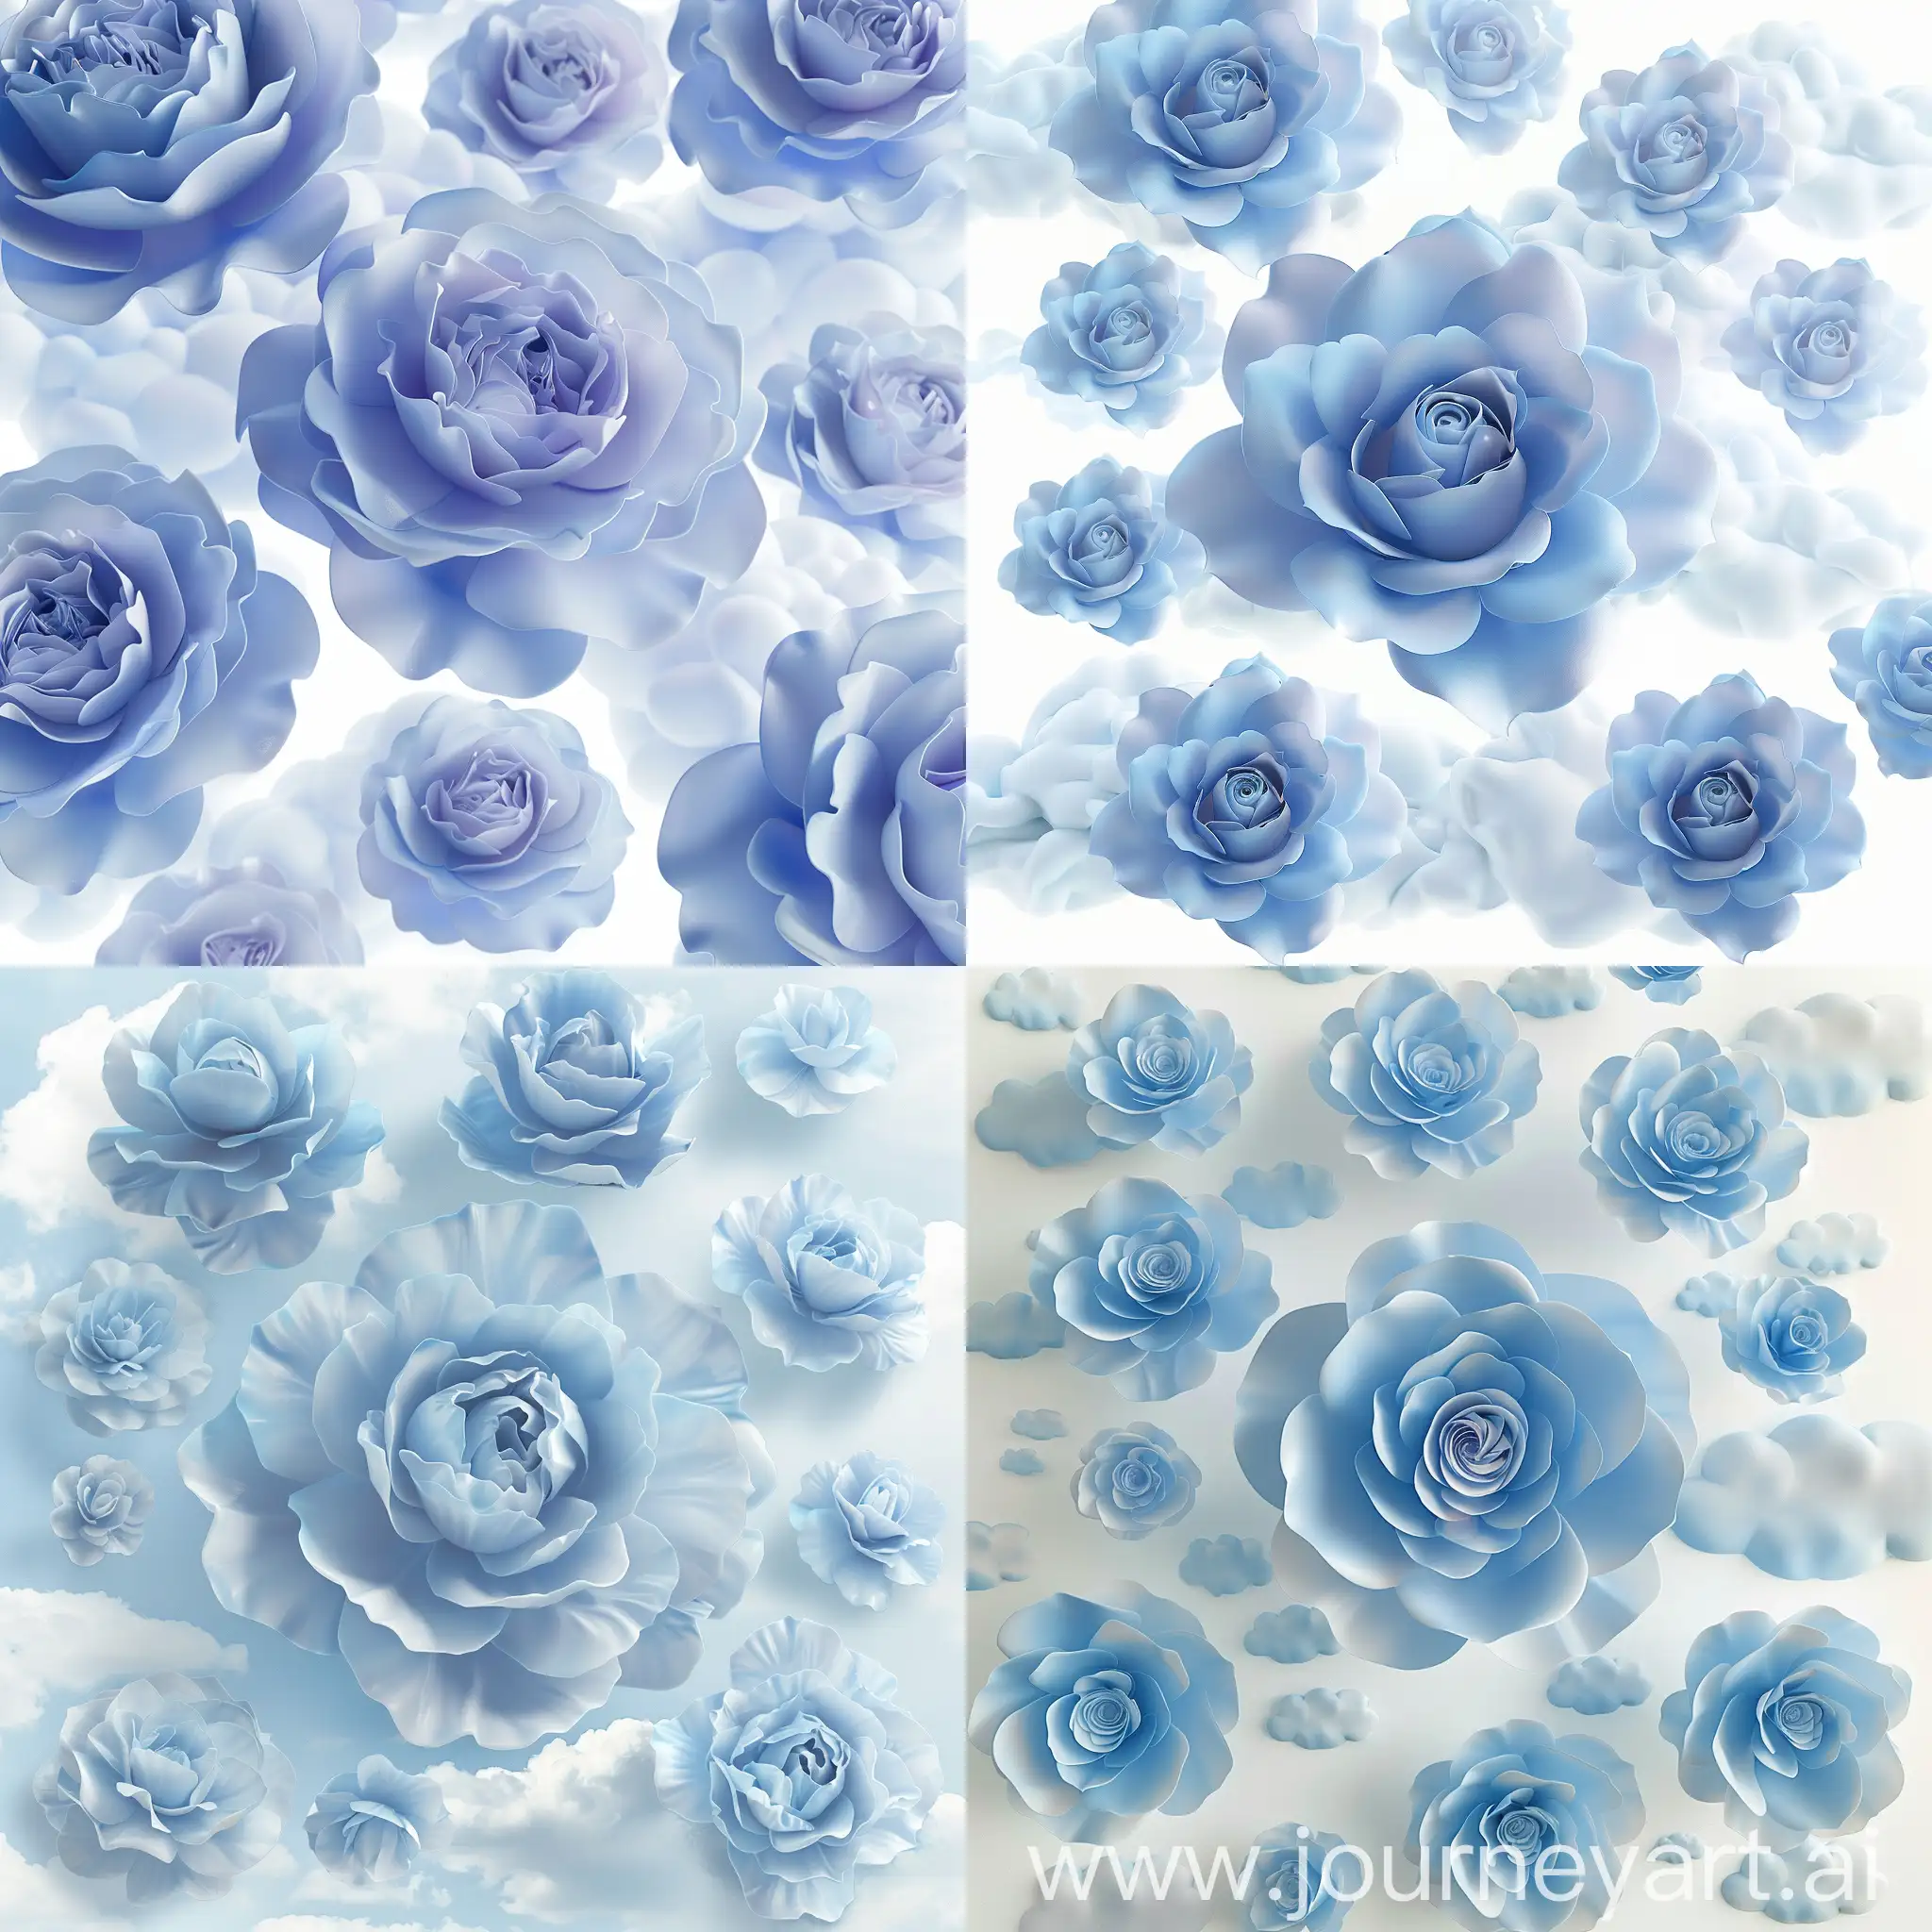 Elegant-3D-Blue-Rose-Collage-for-Wedding-Photography